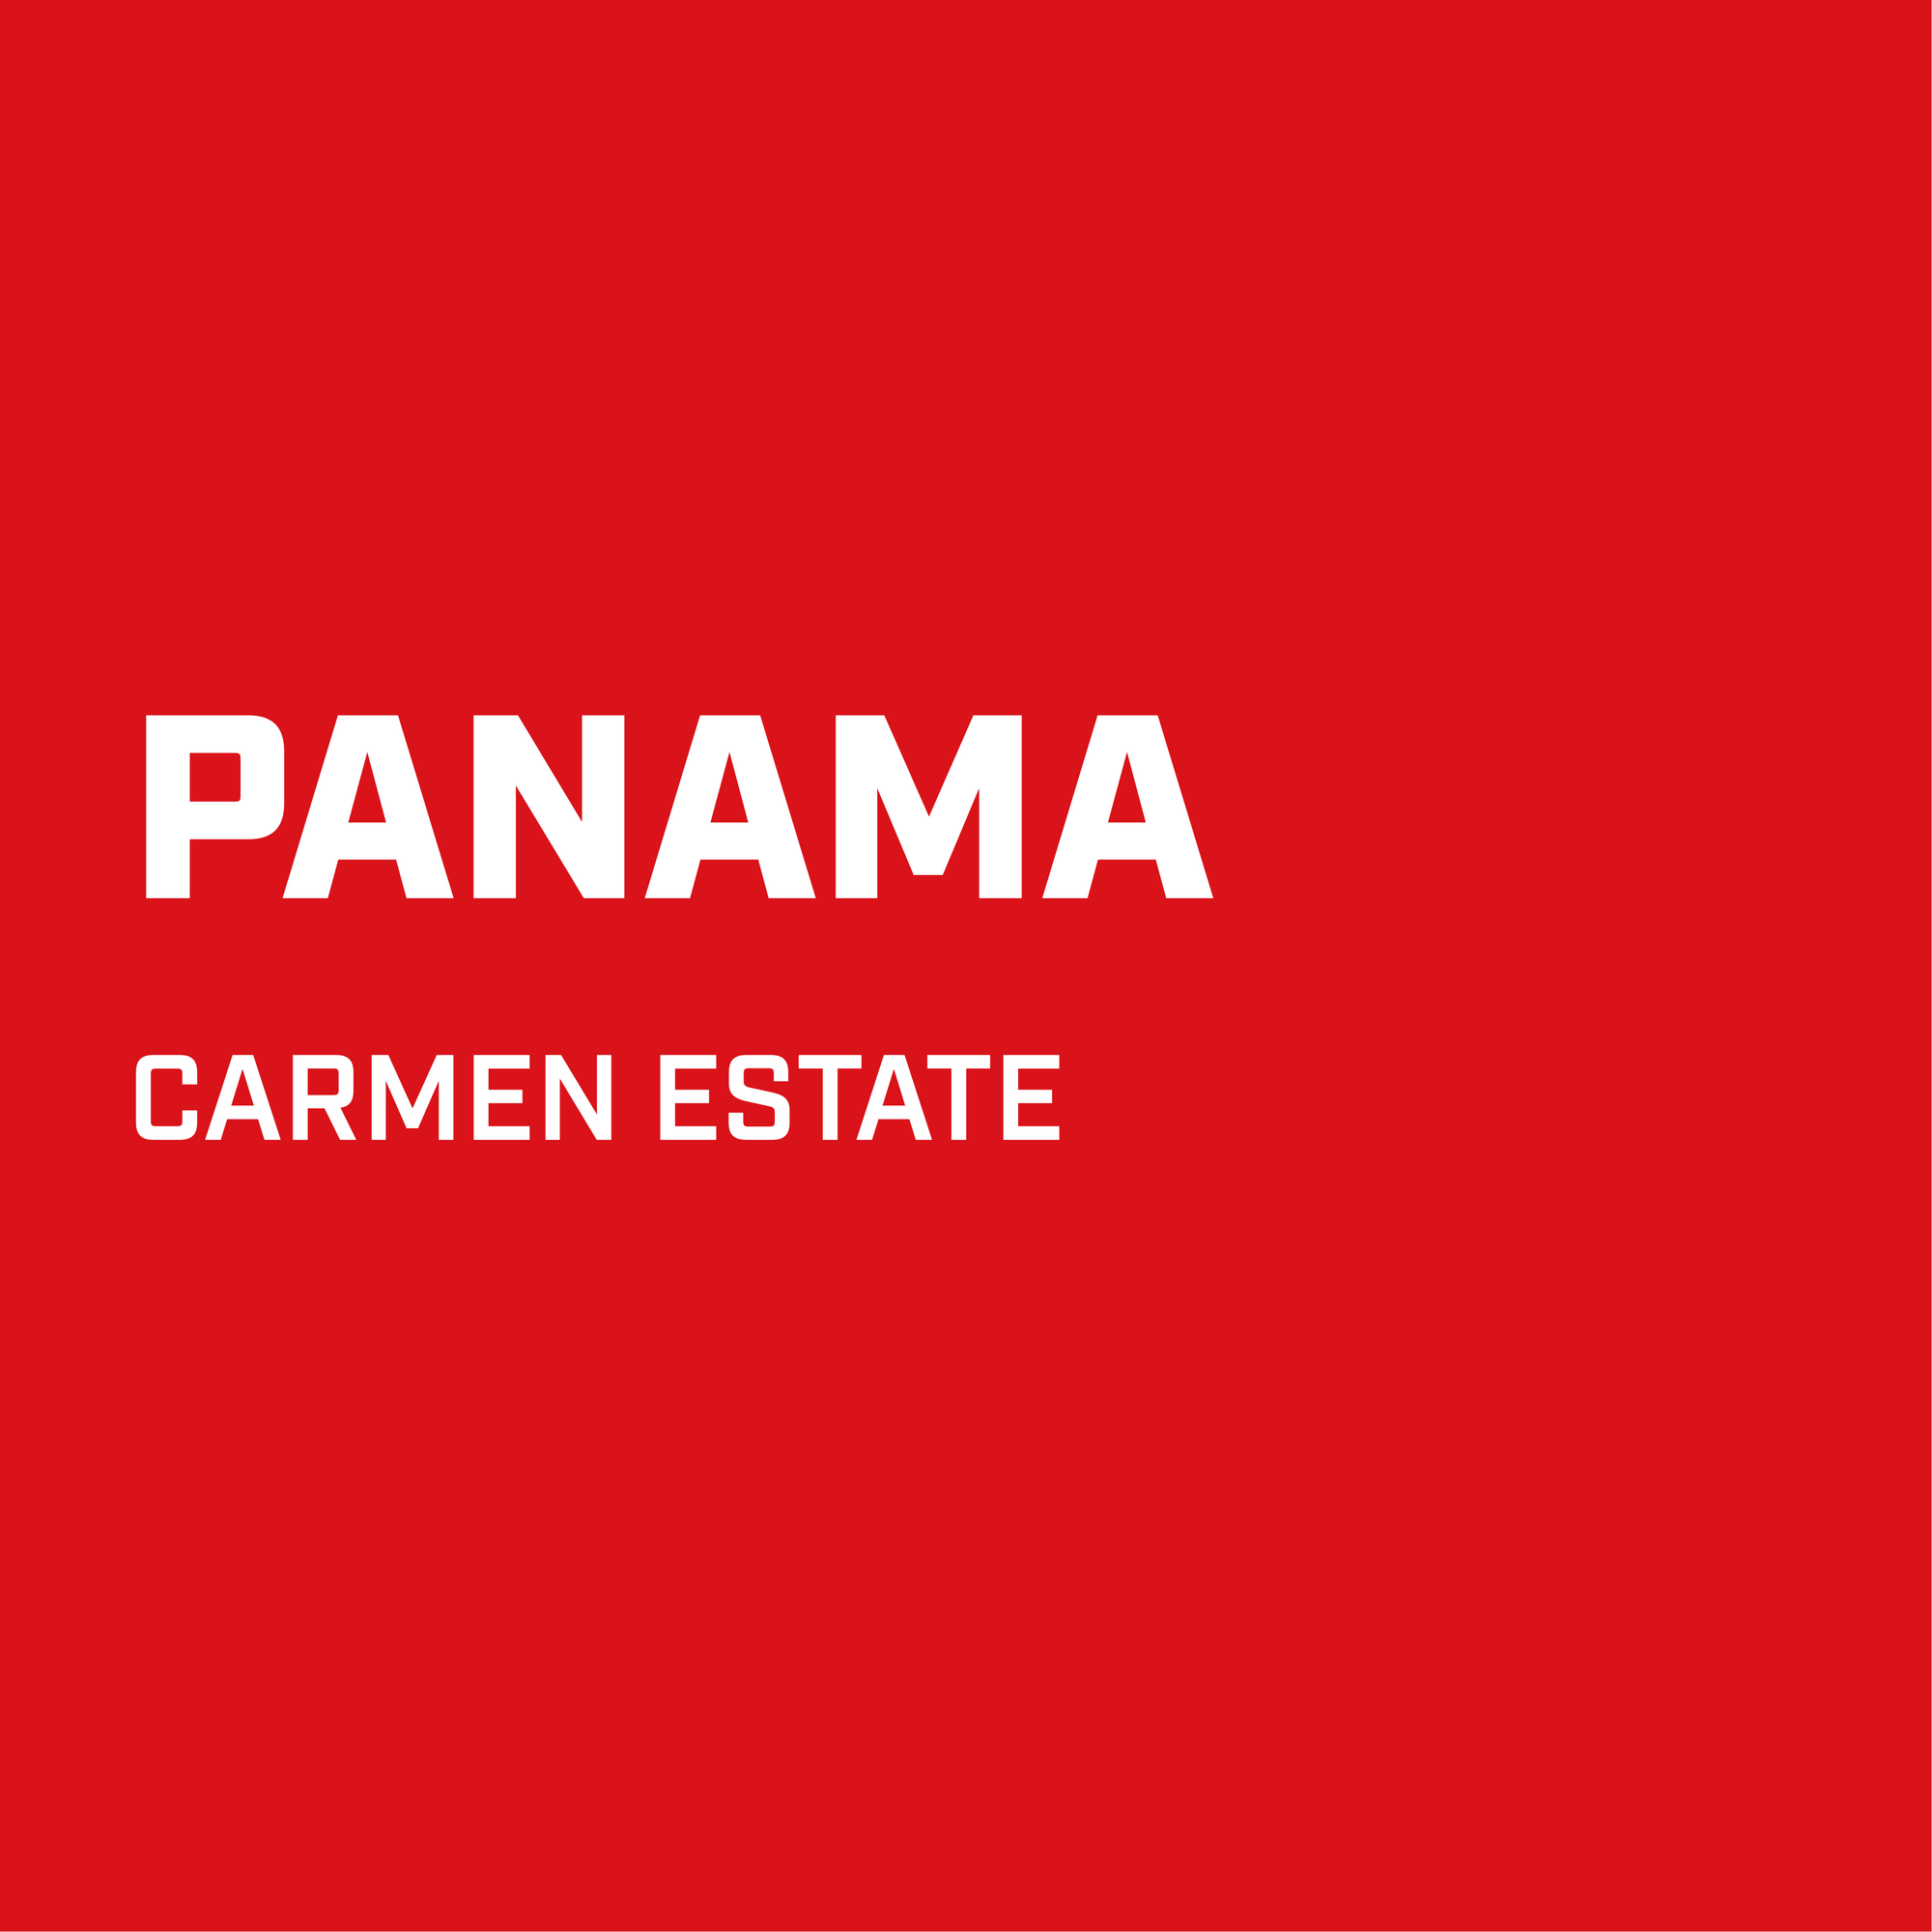 PANAMA // CARMEN ESTATE